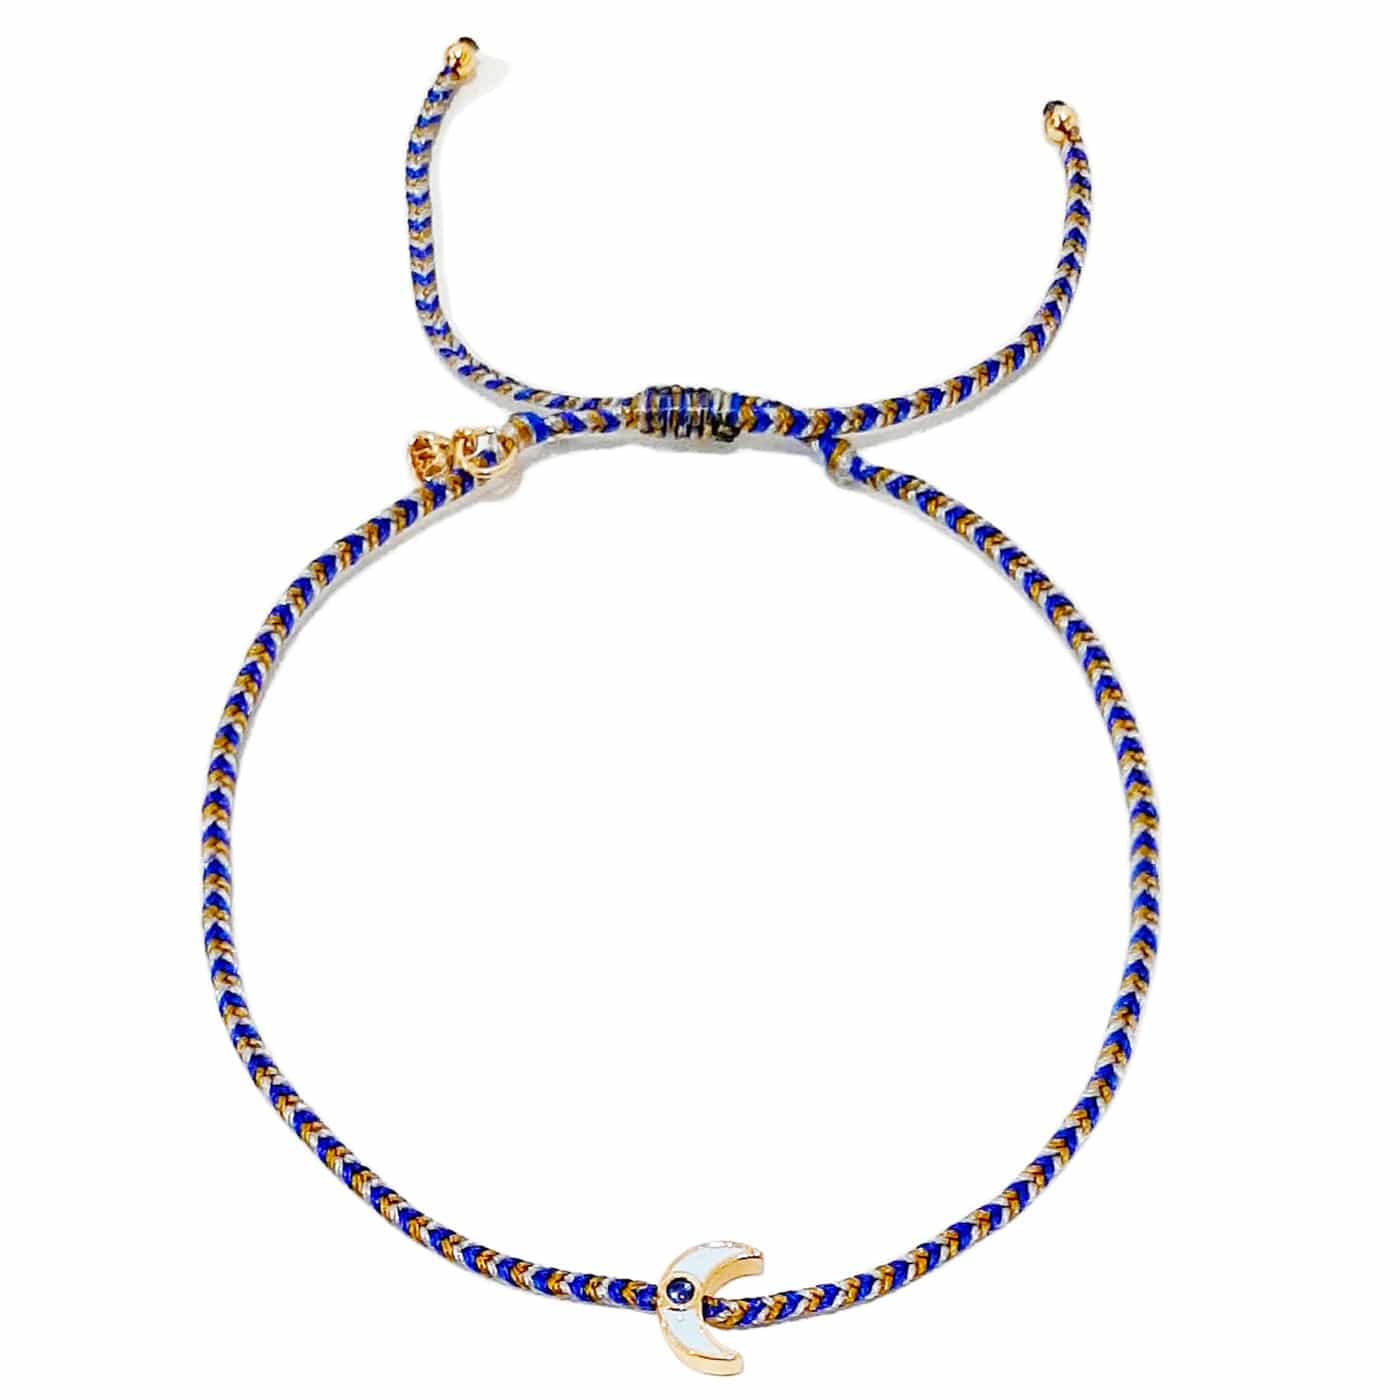 TAI JEWELRY Bracelet Moon Handmade Woven Bracelet With Enamel Charm